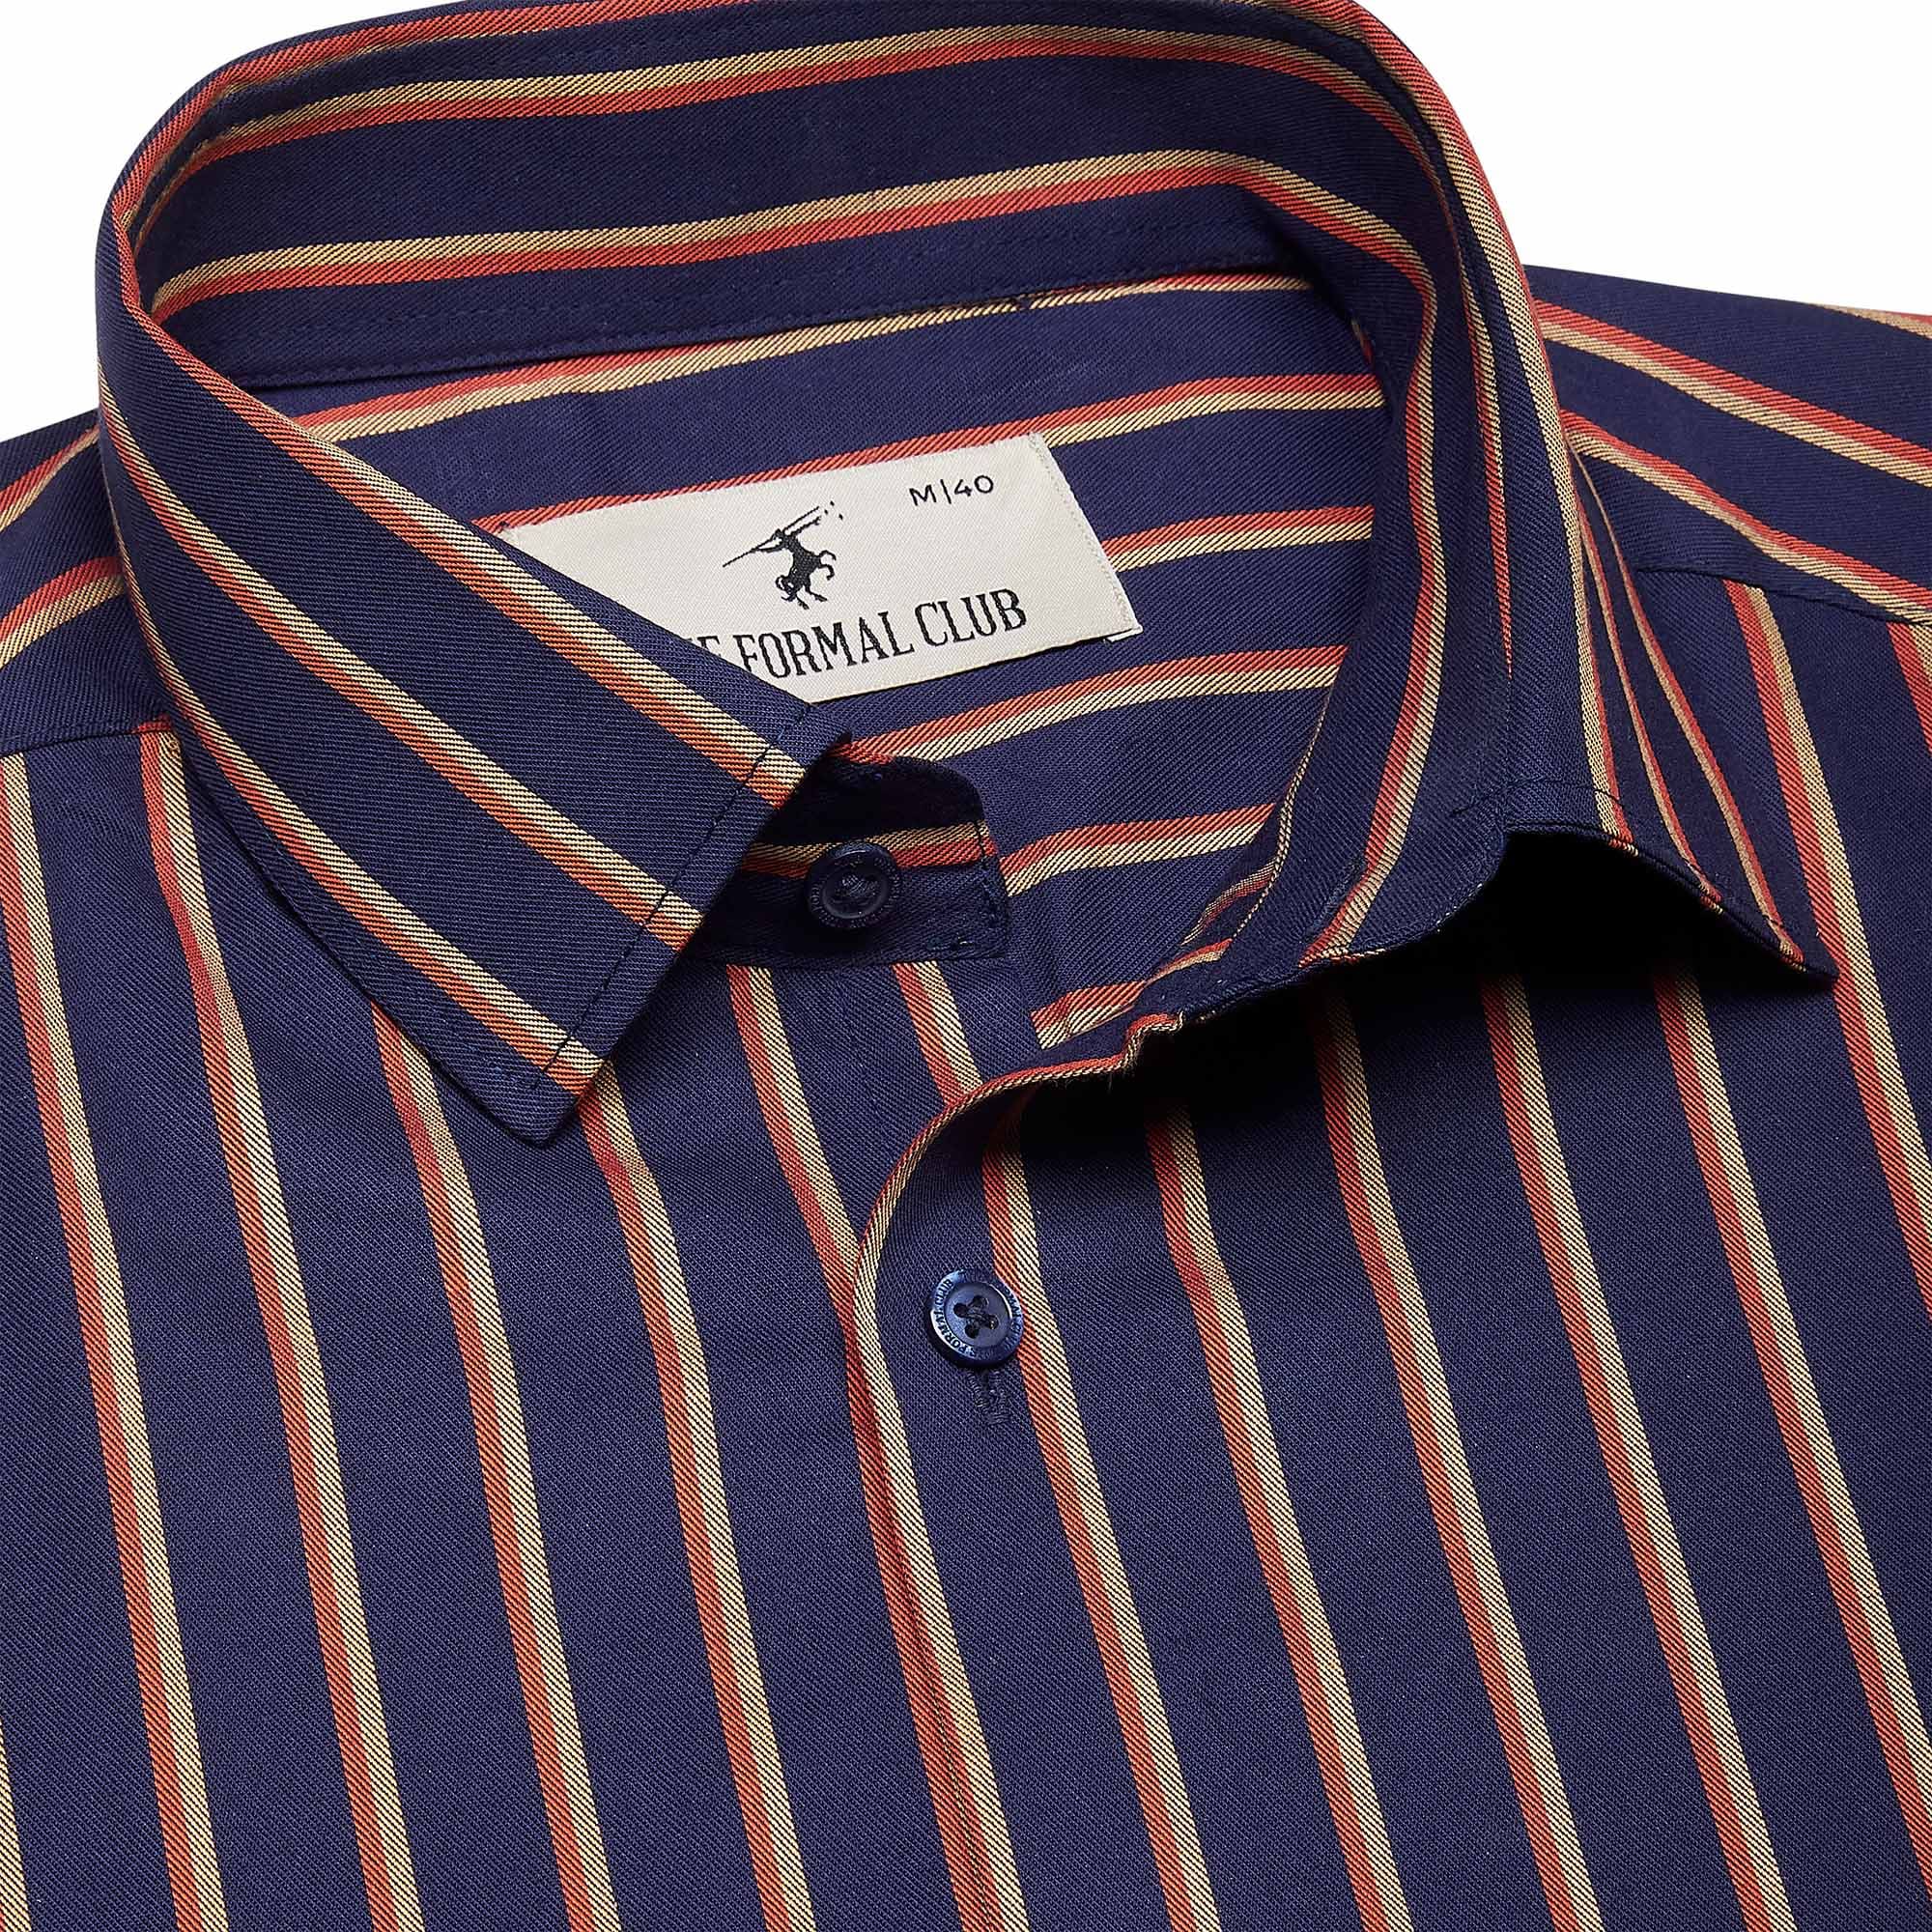 Prestige Stripe Shirt In Navy Blue – The Formal Club